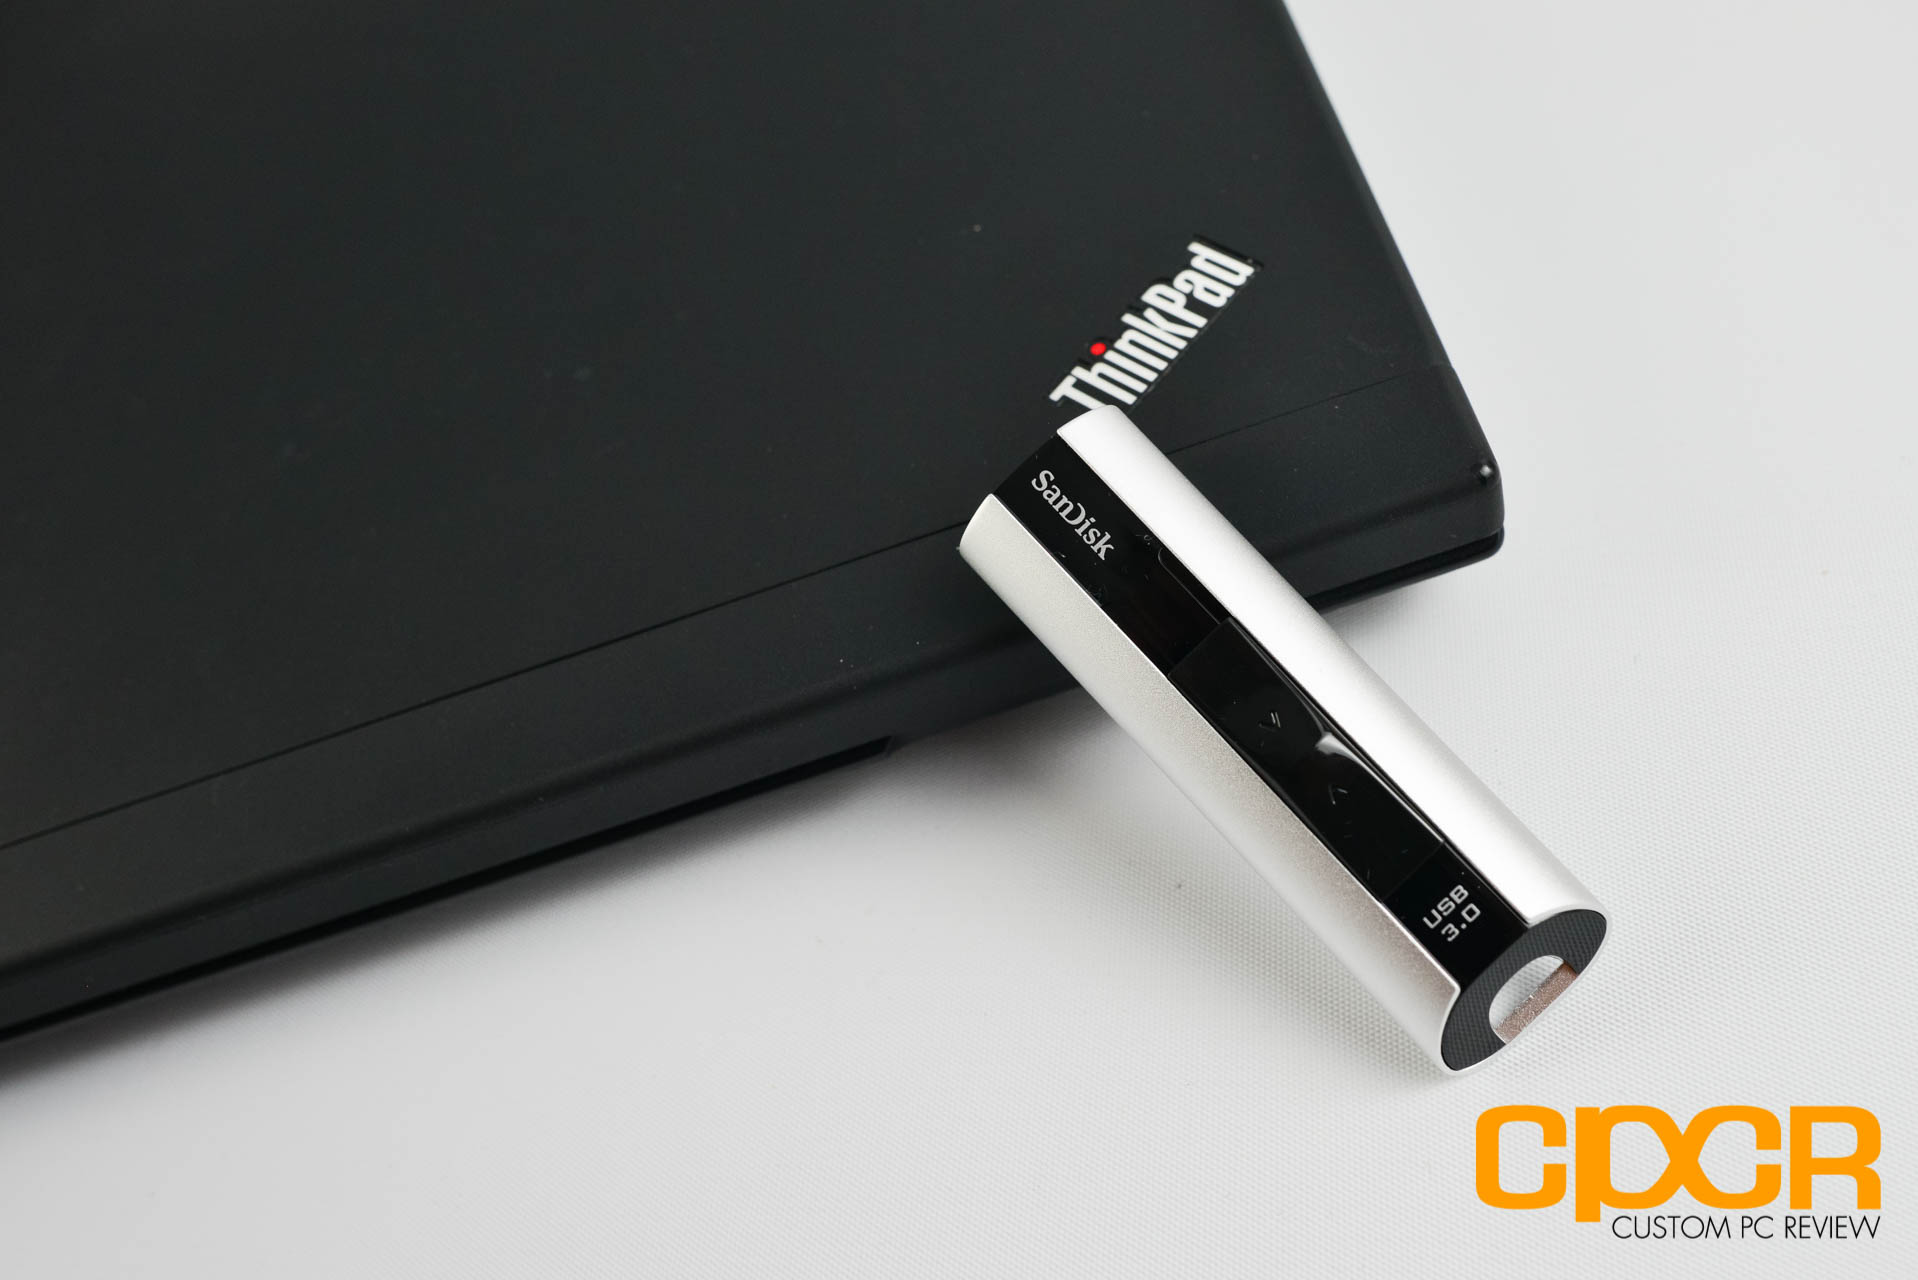 Gensidig kiwi Mig selv Review: SanDisk Extreme PRO 128GB USB 3.0 Flash Drive | Custom PC Review